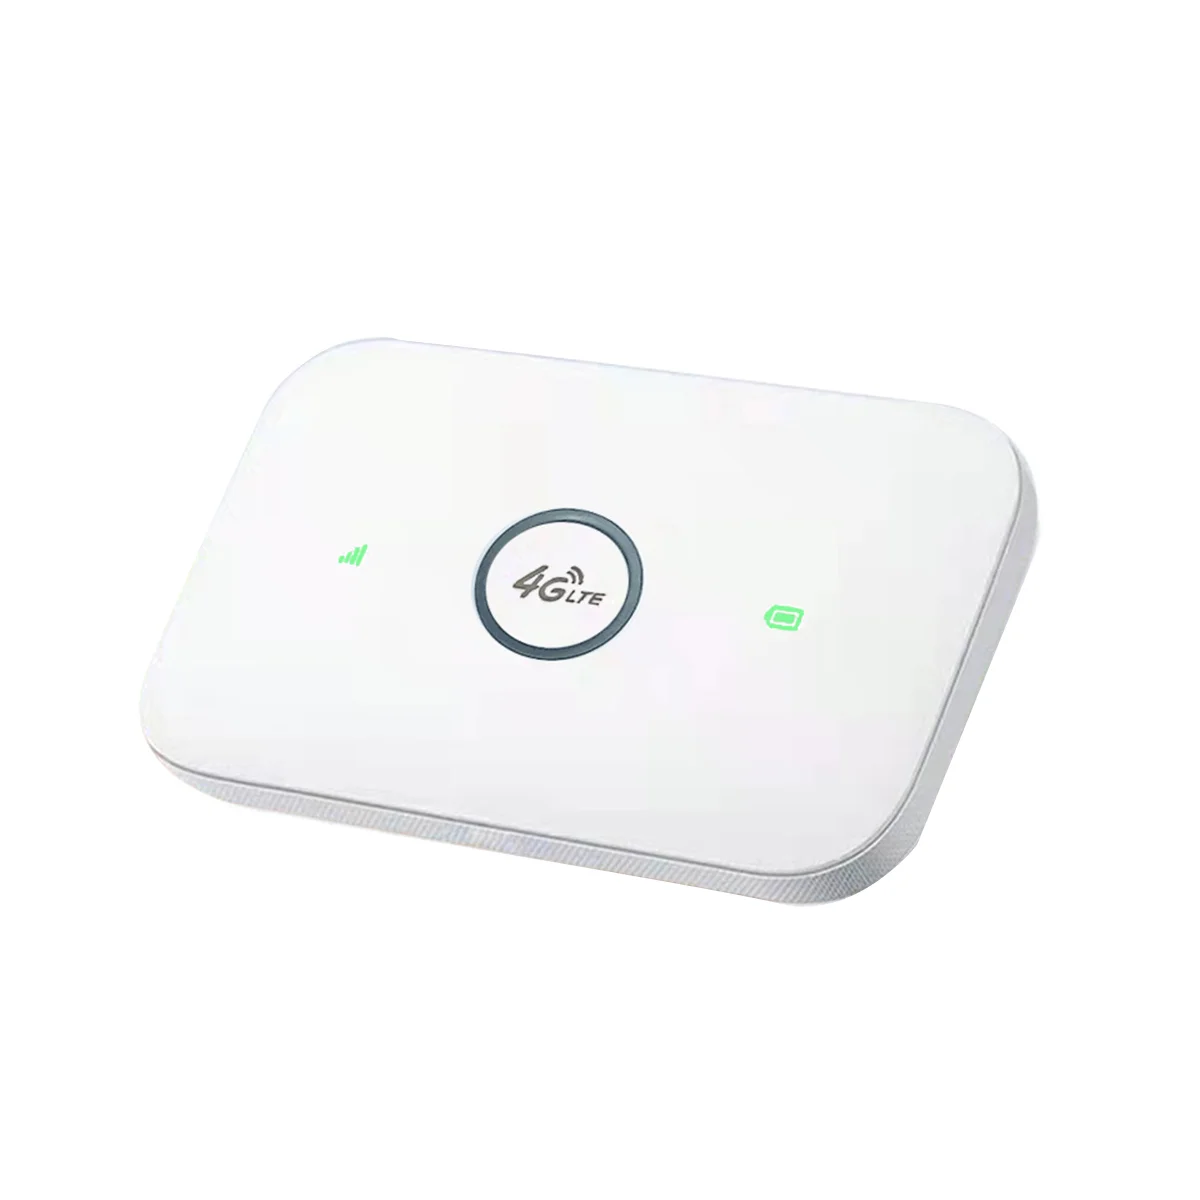 

4G MiFi Карманный Wi-Fi роутер 150 Мбит/с WiFi модем автомобильный Мобильный Wi-Fi беспроводная точка доступа со слотом для Sim-карты беспроводной MiFi